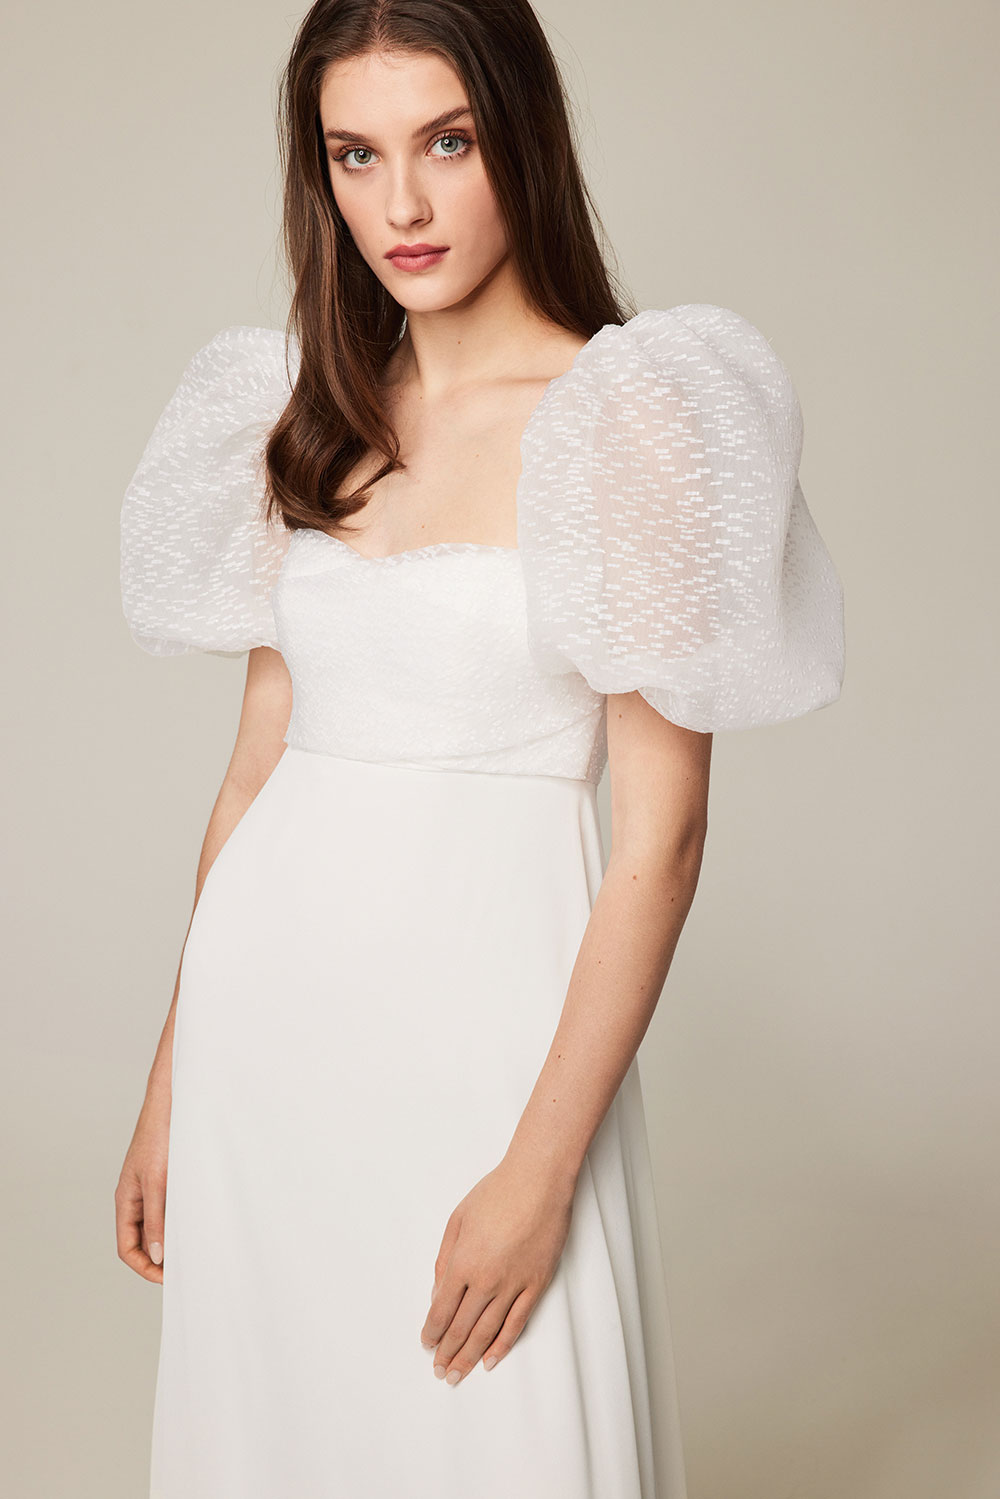 Jesus Peiro 2501 wedding dress with puff sleeves